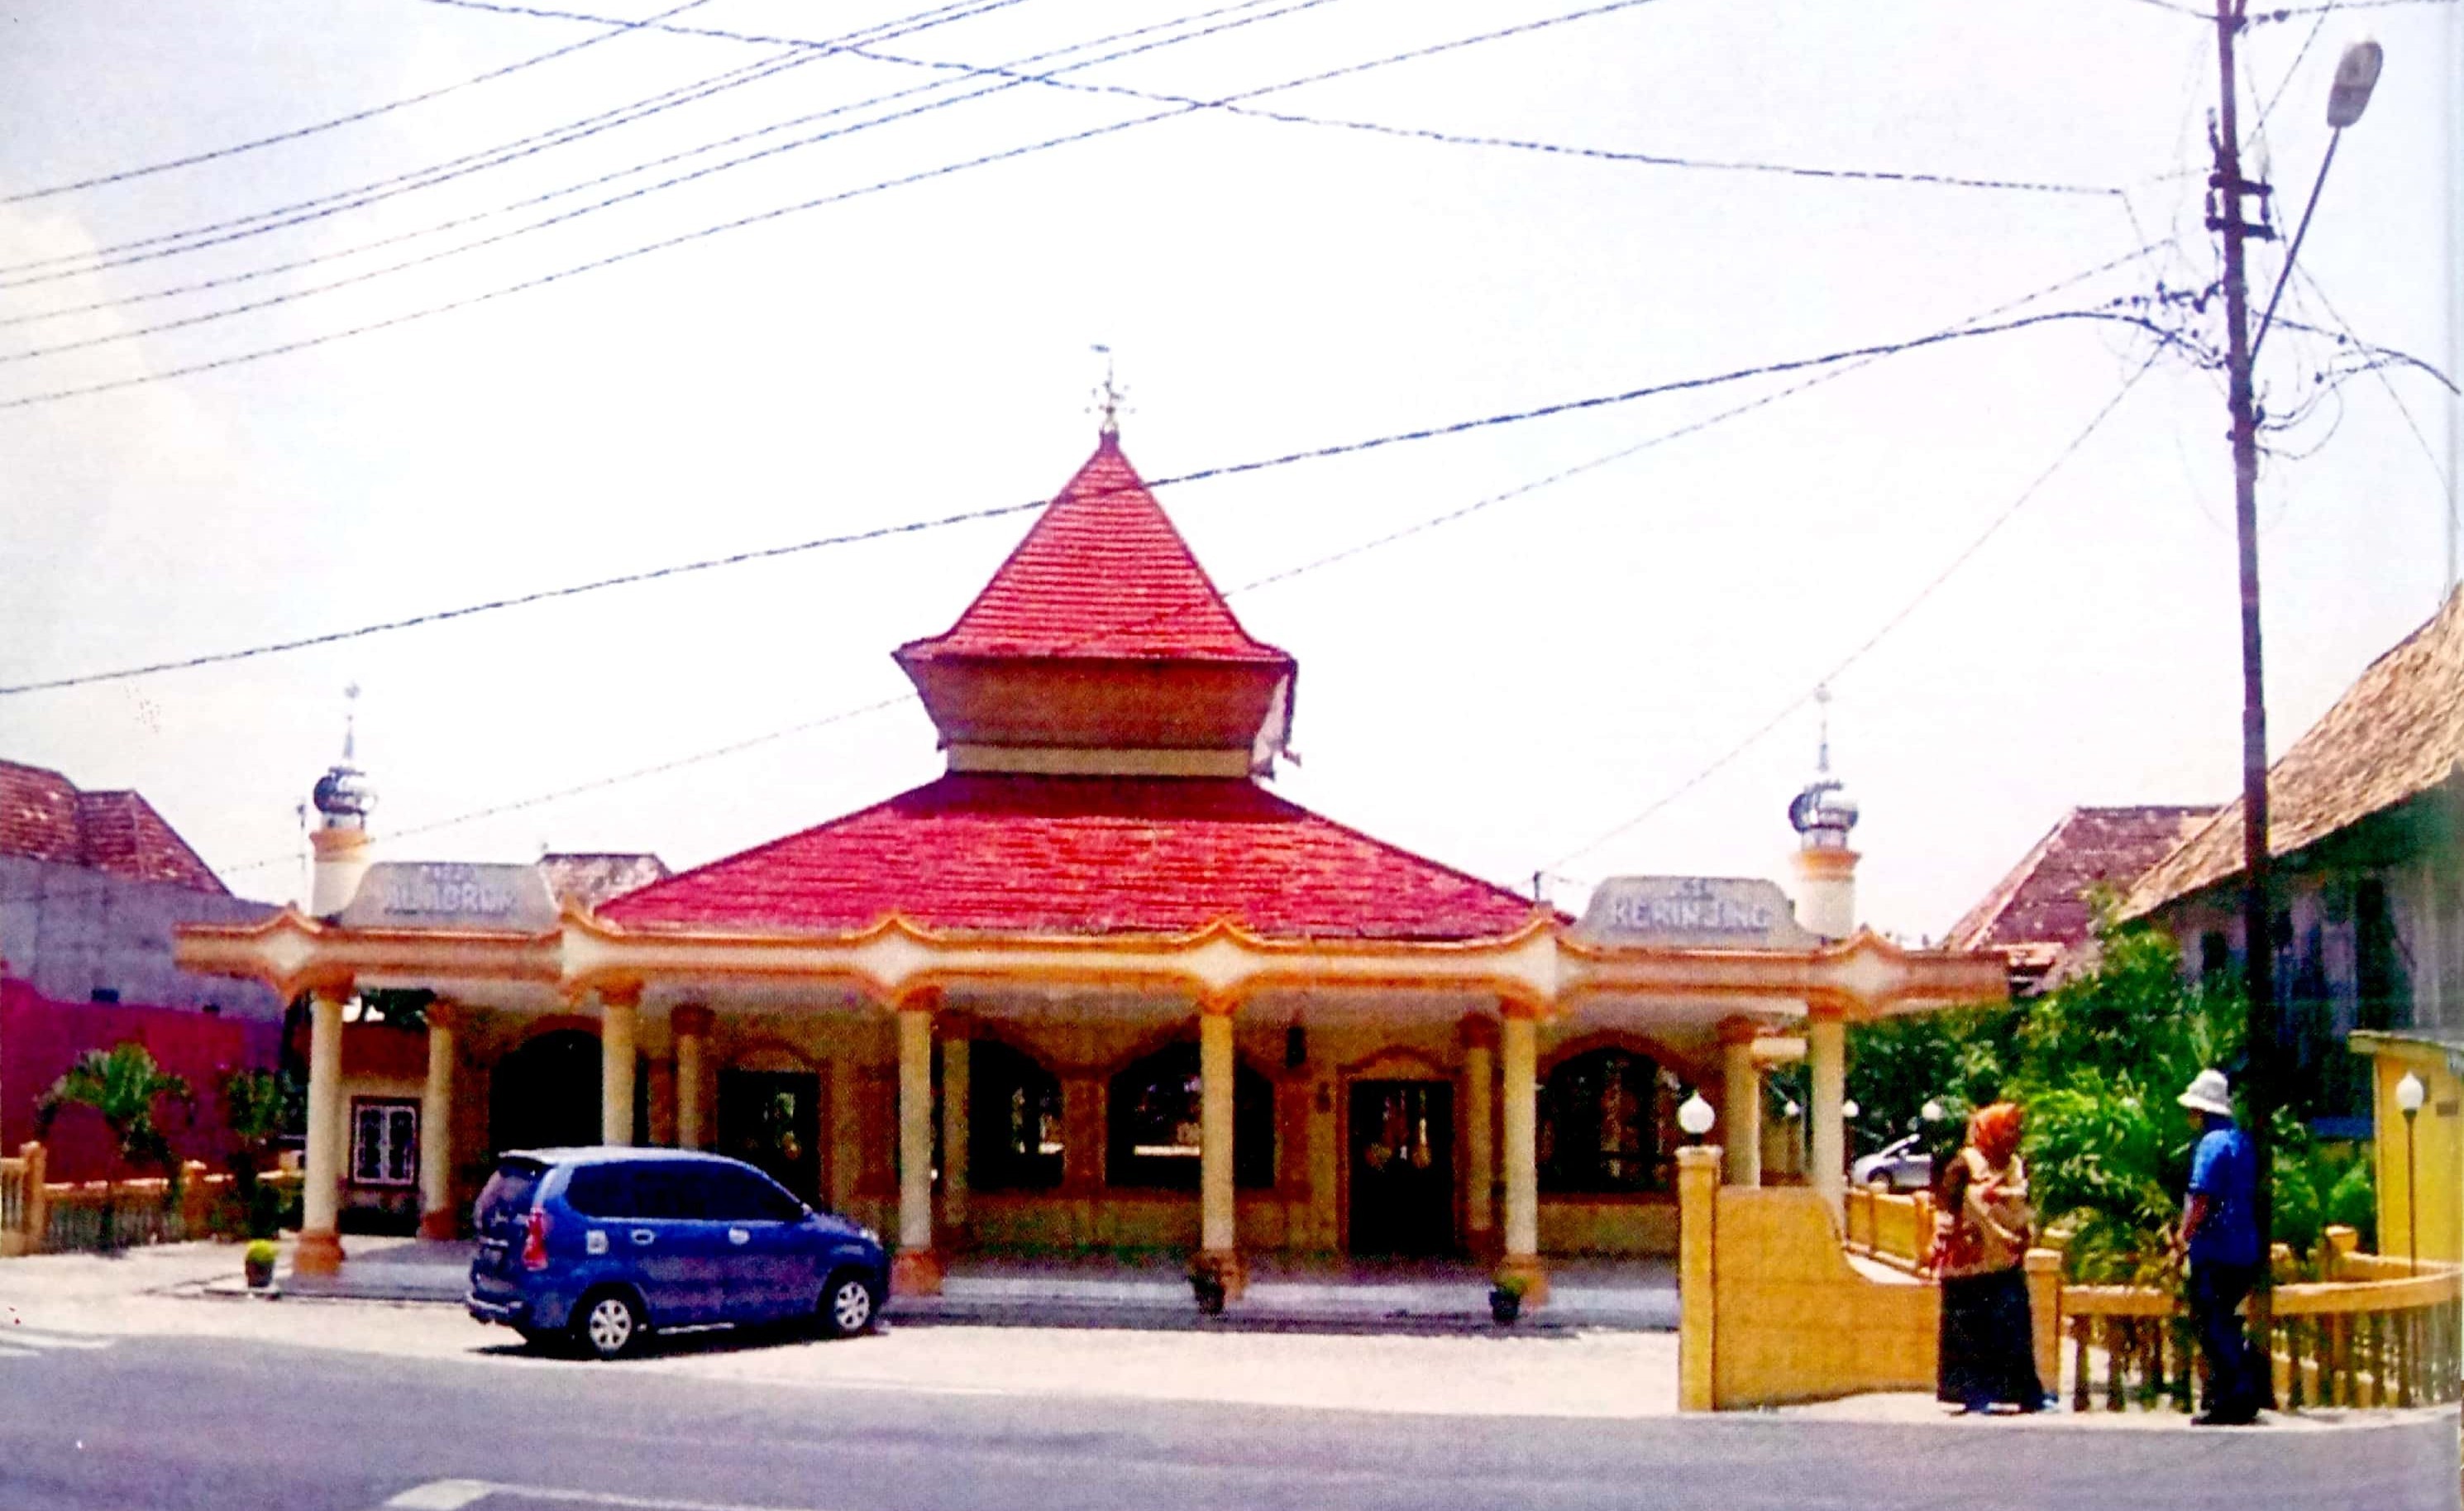 Ini Nilai Sejarah Masjid Al Abror Desa Kerinjing Kabupaten Ogan Ilir, Wajib Diketahui